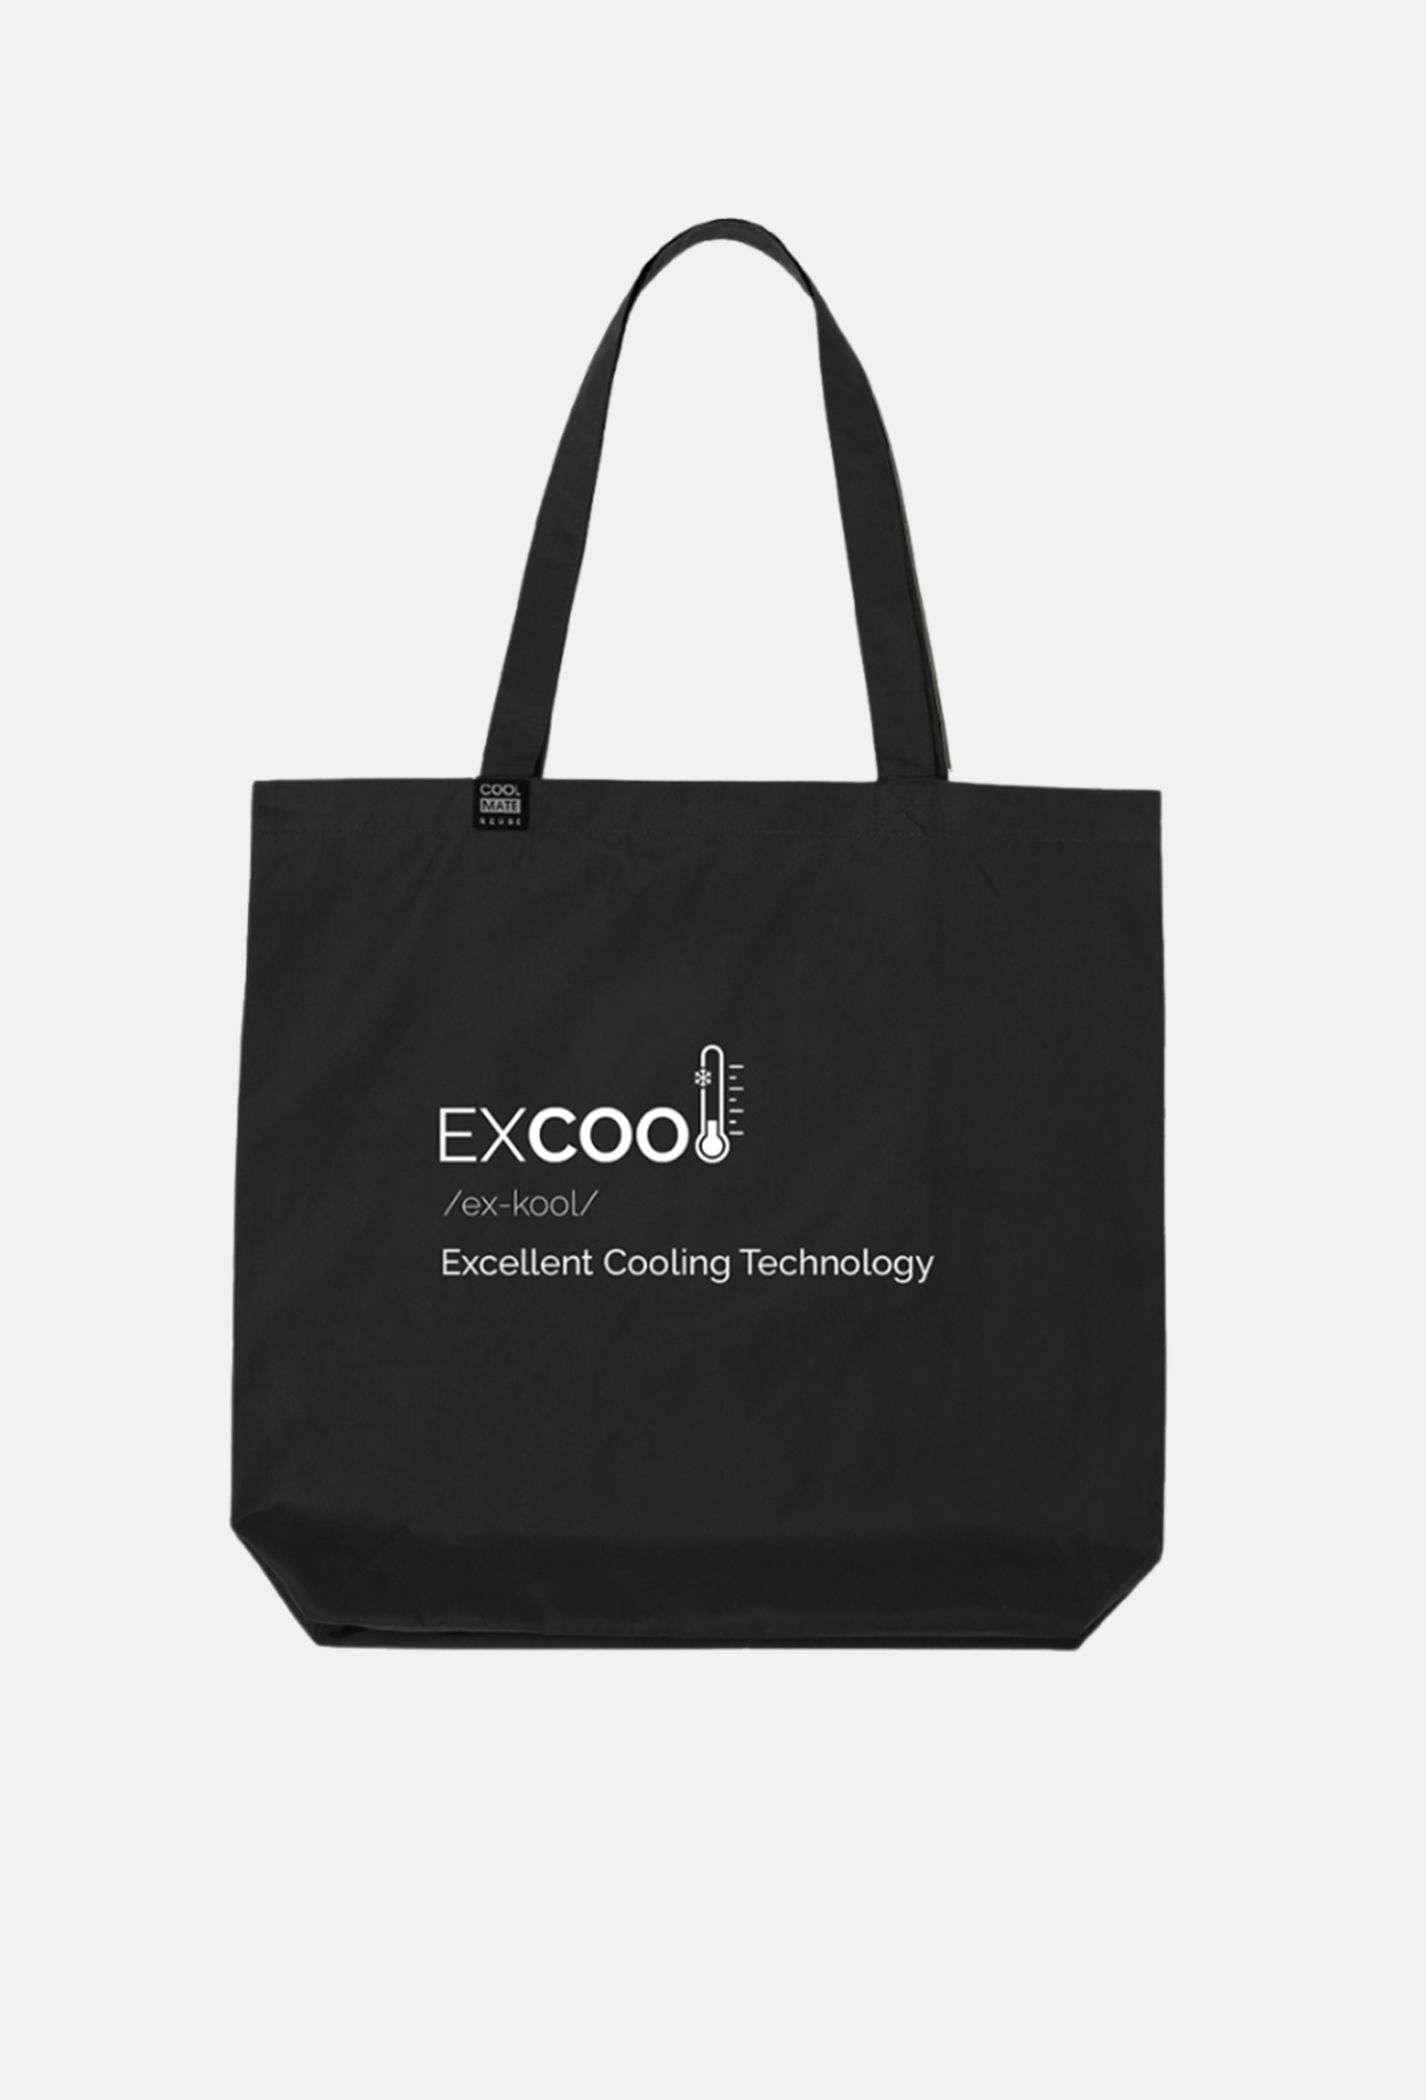 [9-11/9 MUA 3 GIẢM 7%] COOLMATE – Túi Clean Bag in Excool thời trang, tiện lợi (màu ngẫu nhiên) từ Coolmate